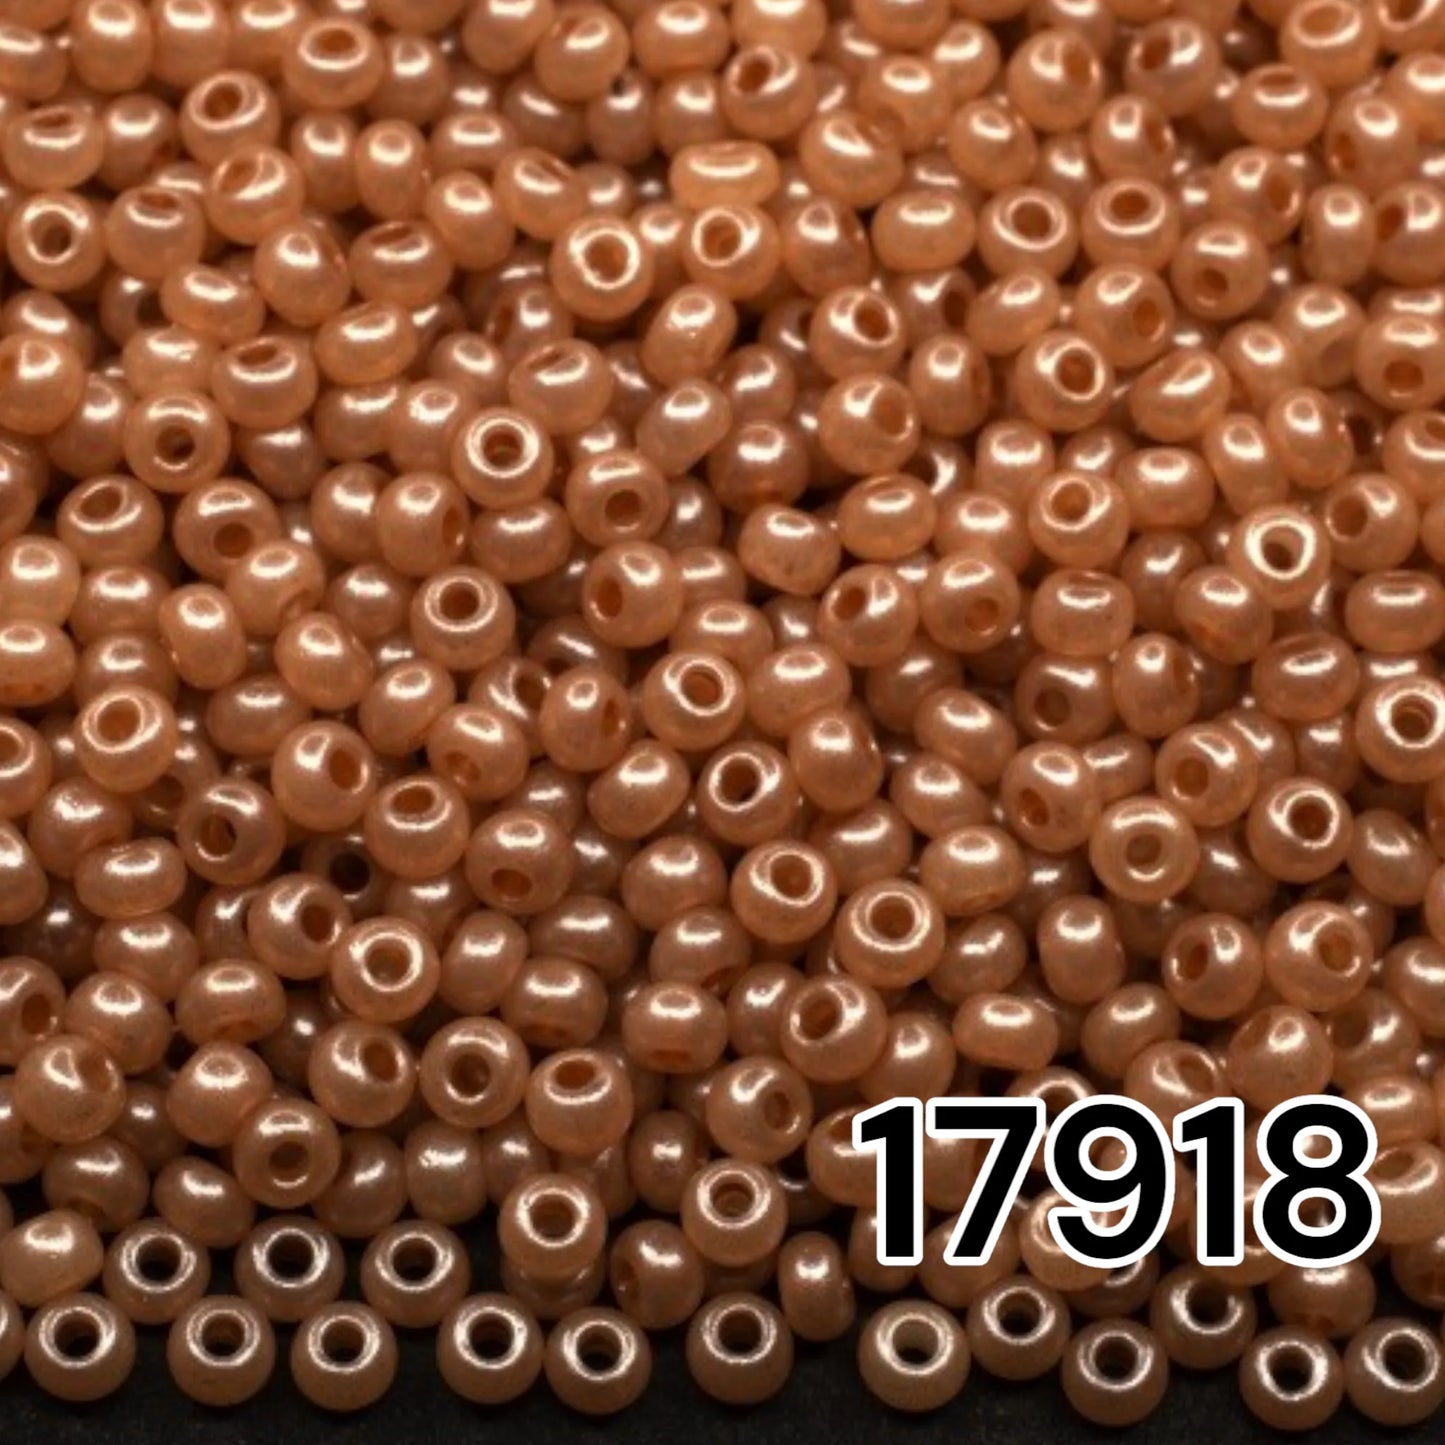 17918 Czech seed beads PRECIOSA round 10/0 beige brown. Alabaster - Terra Pearl.